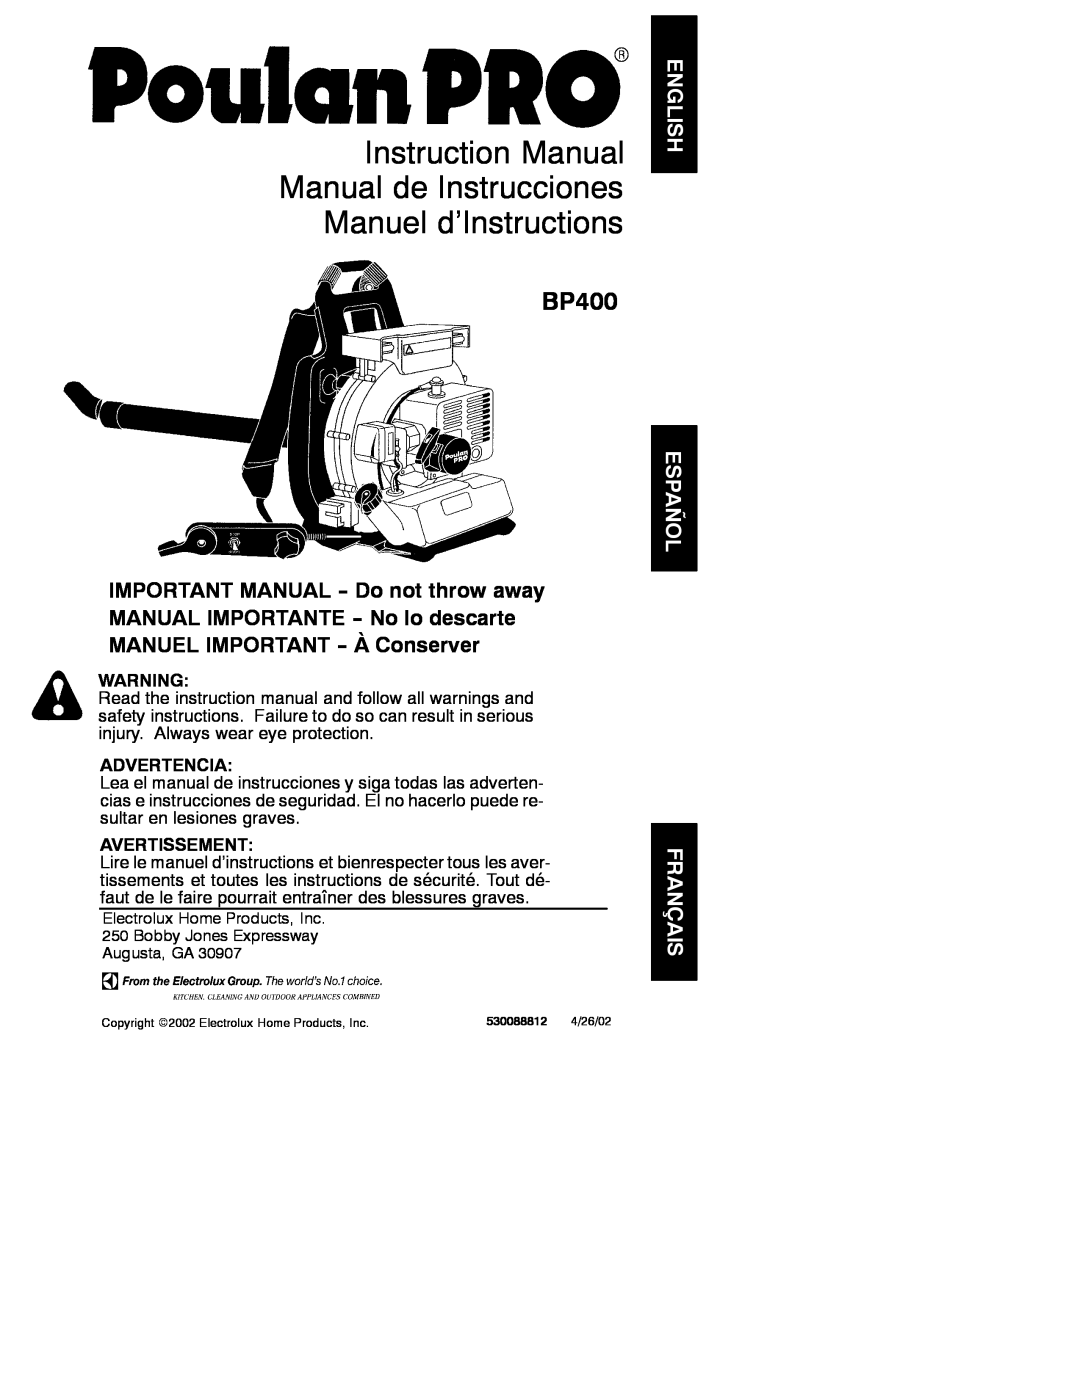 Poulan BP400 instruction manual Advertencia, Avertissement 